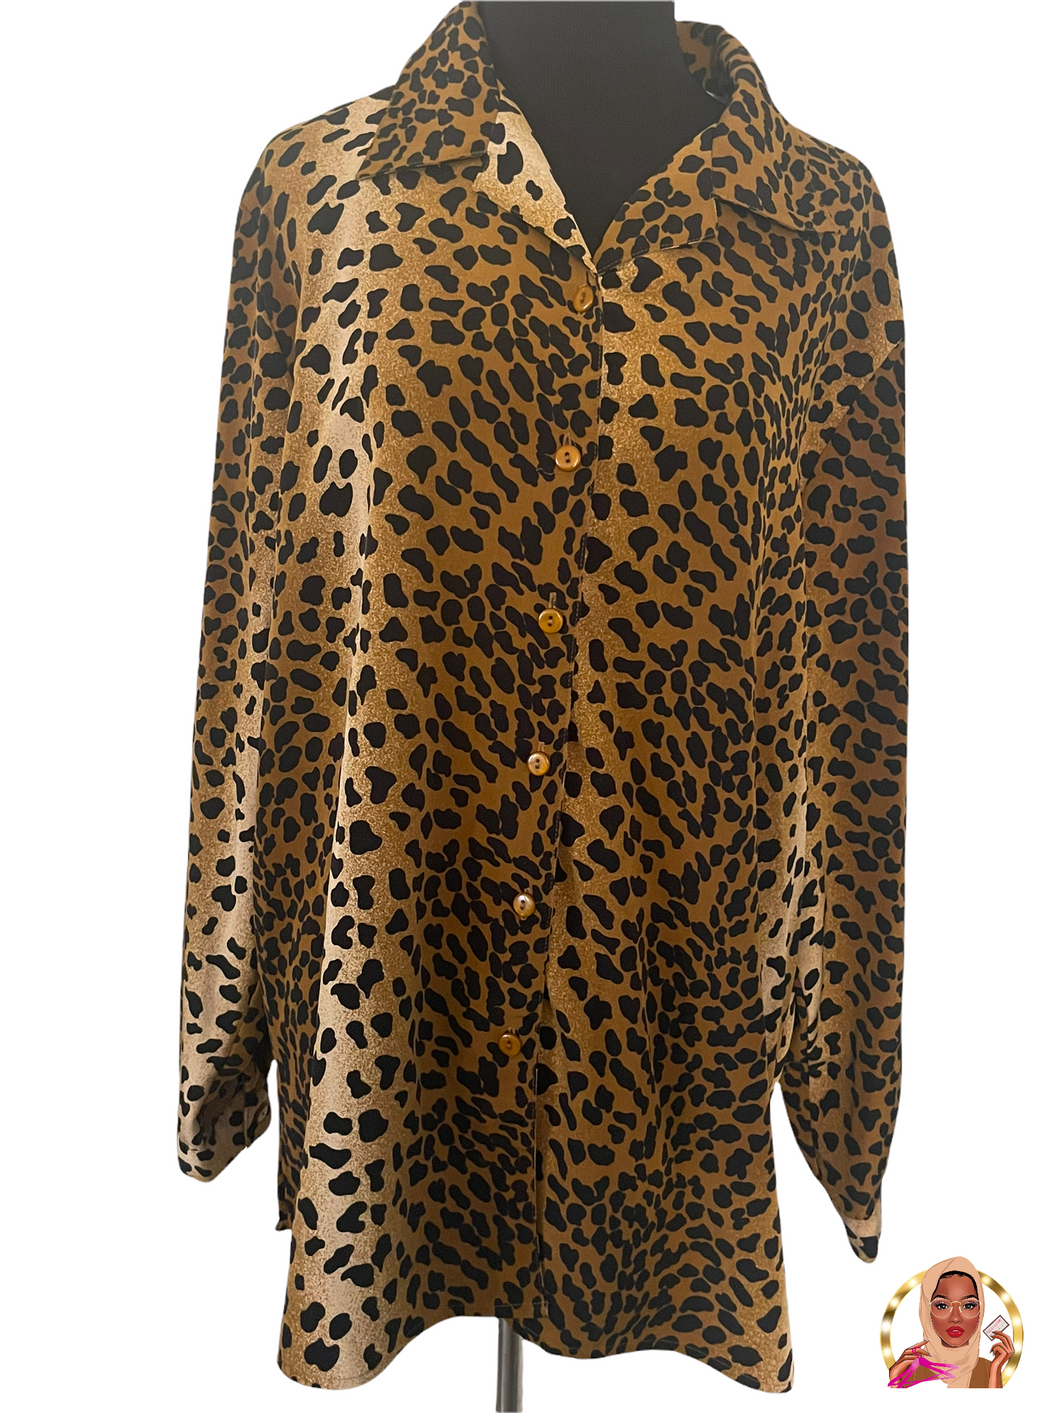 Vintage Leopard Print Shirt